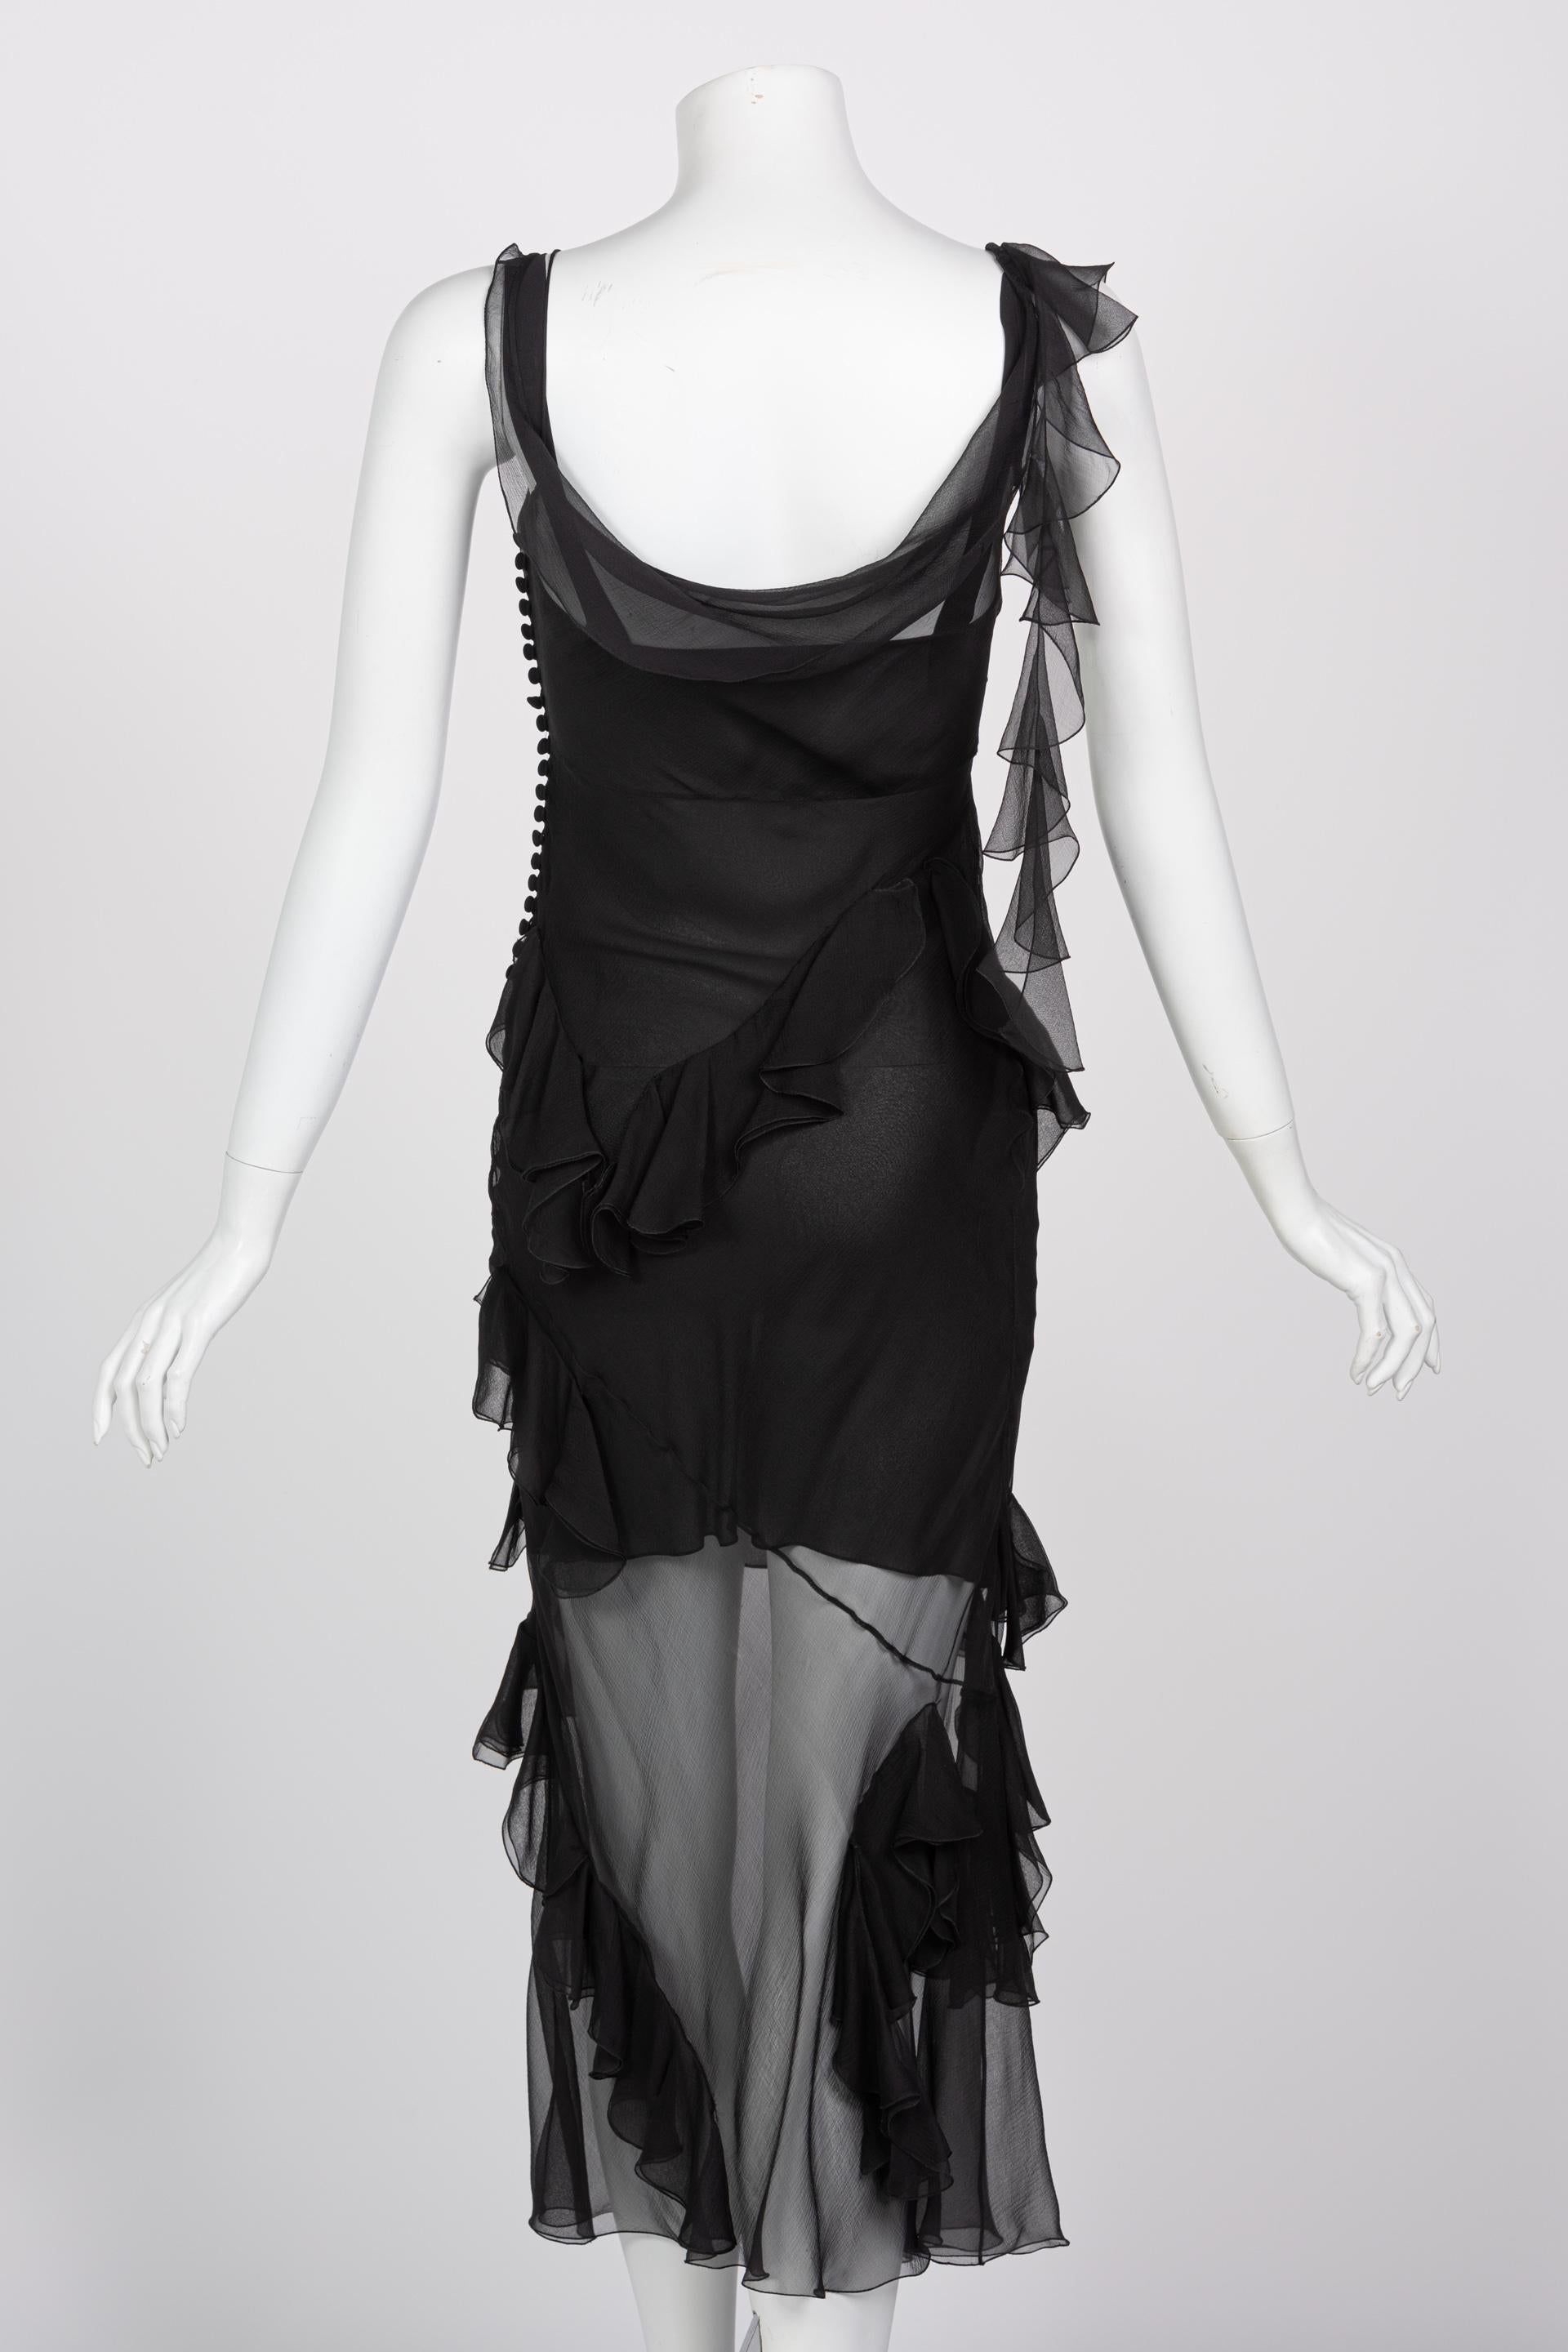 Women's Christian Dior by Galliano Black Sheer Silk Sleeveless Dress